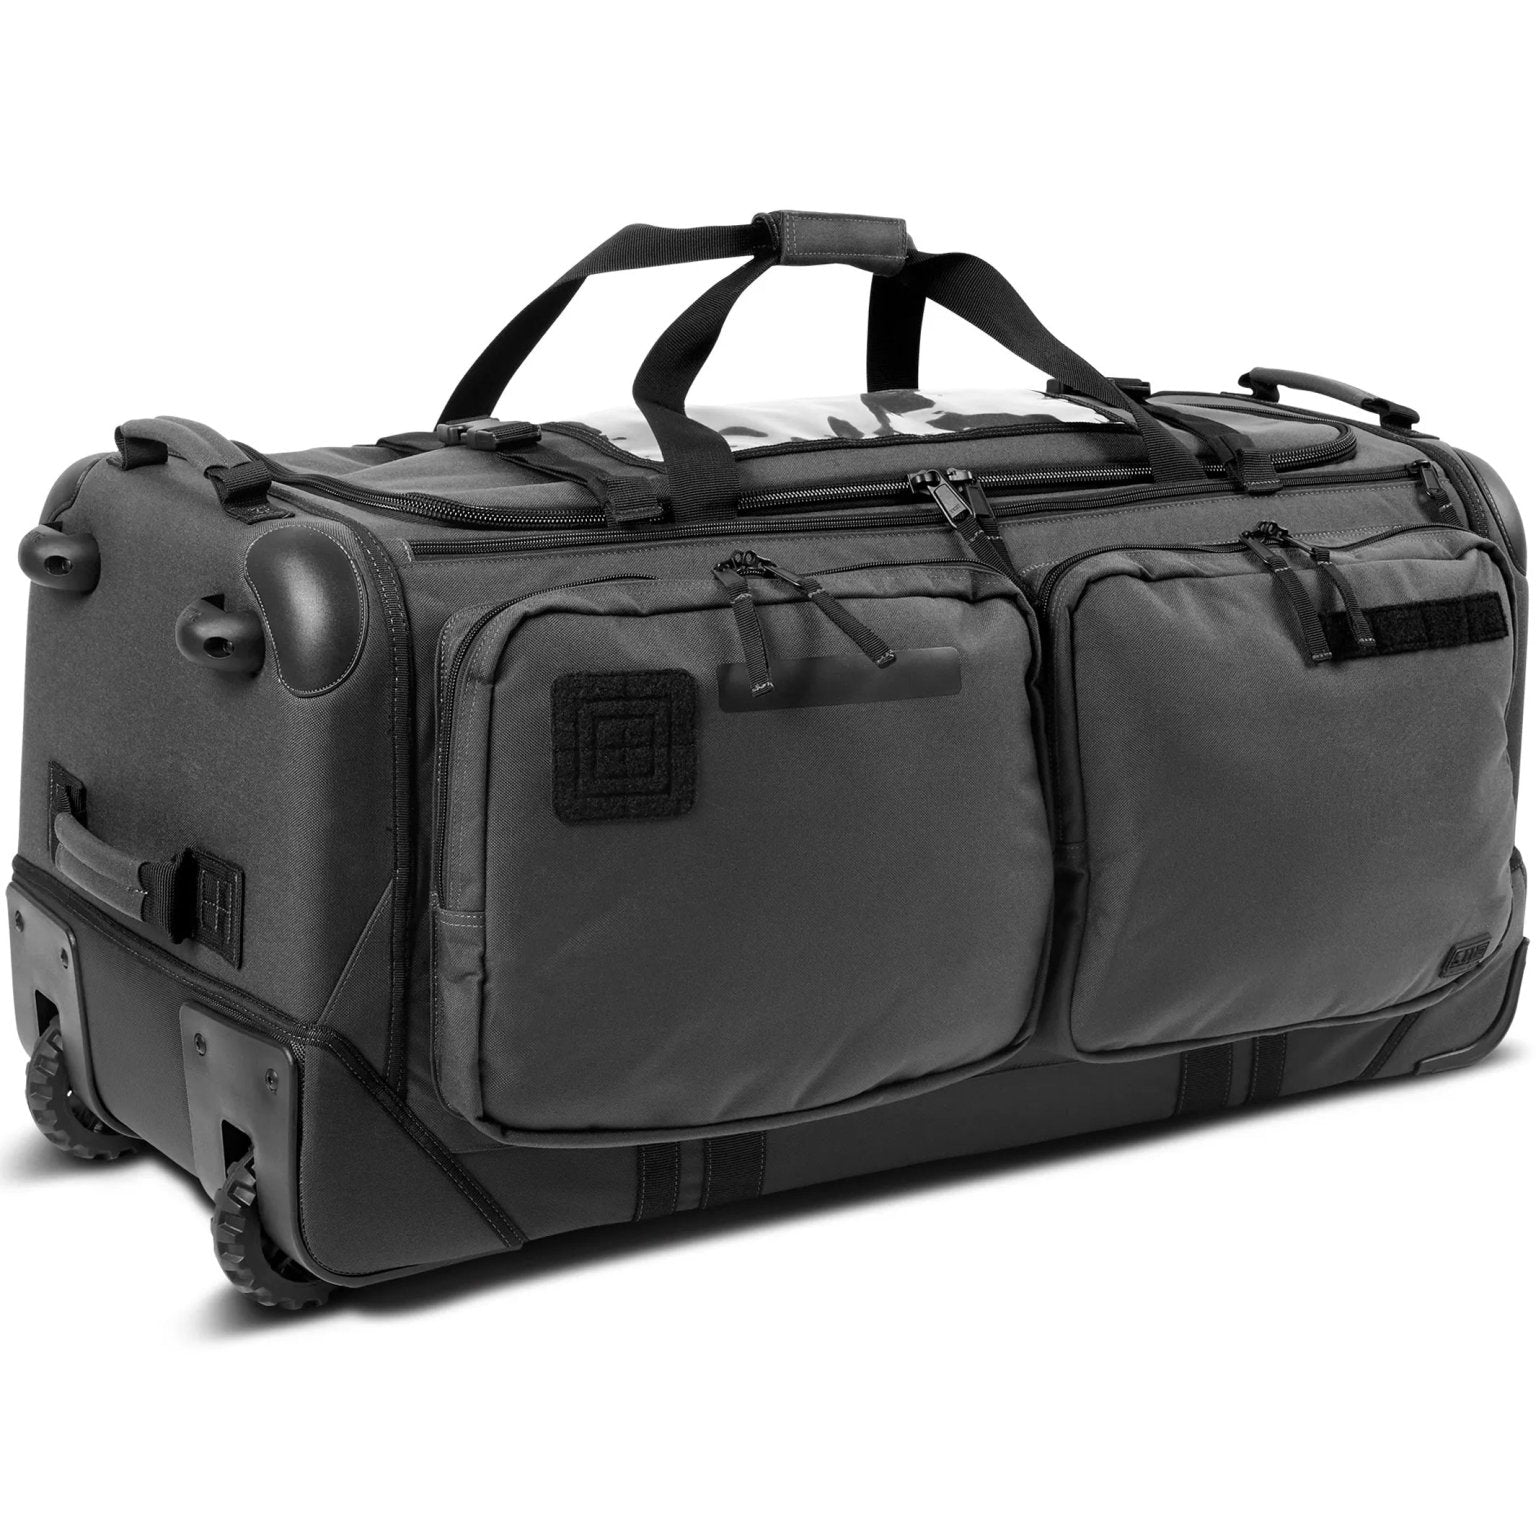 4elementsclothing5.11 Tactical5.11 Tactical - 5.11 SOMS™ 3.0 - 126 Litre Rolling Gear Bag, 1680D Ballistic Nylon, Style 56476Bag56476-026